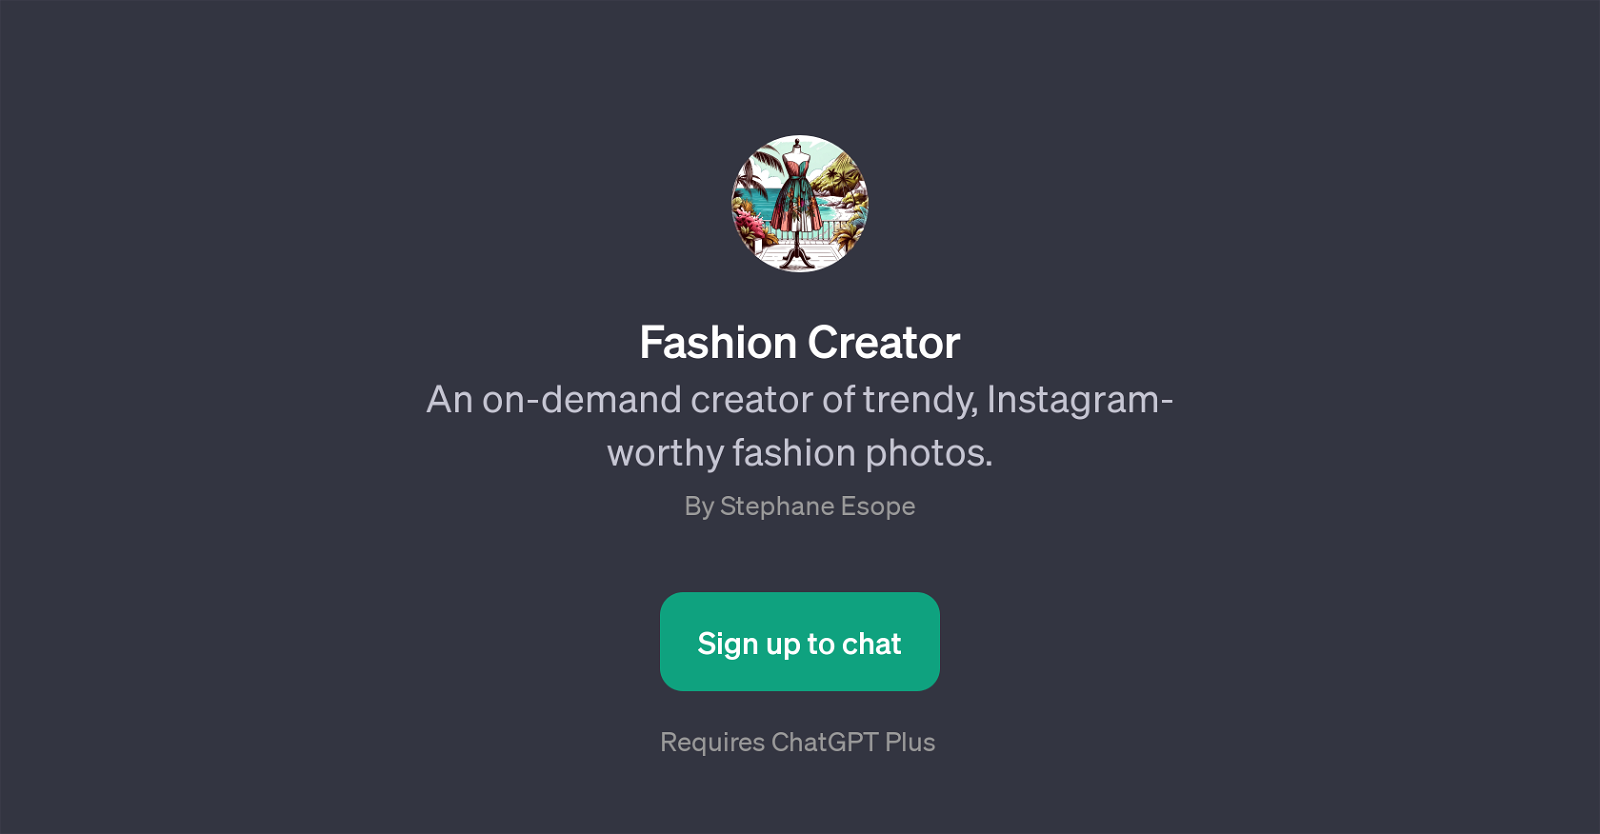 Fashion Creator website